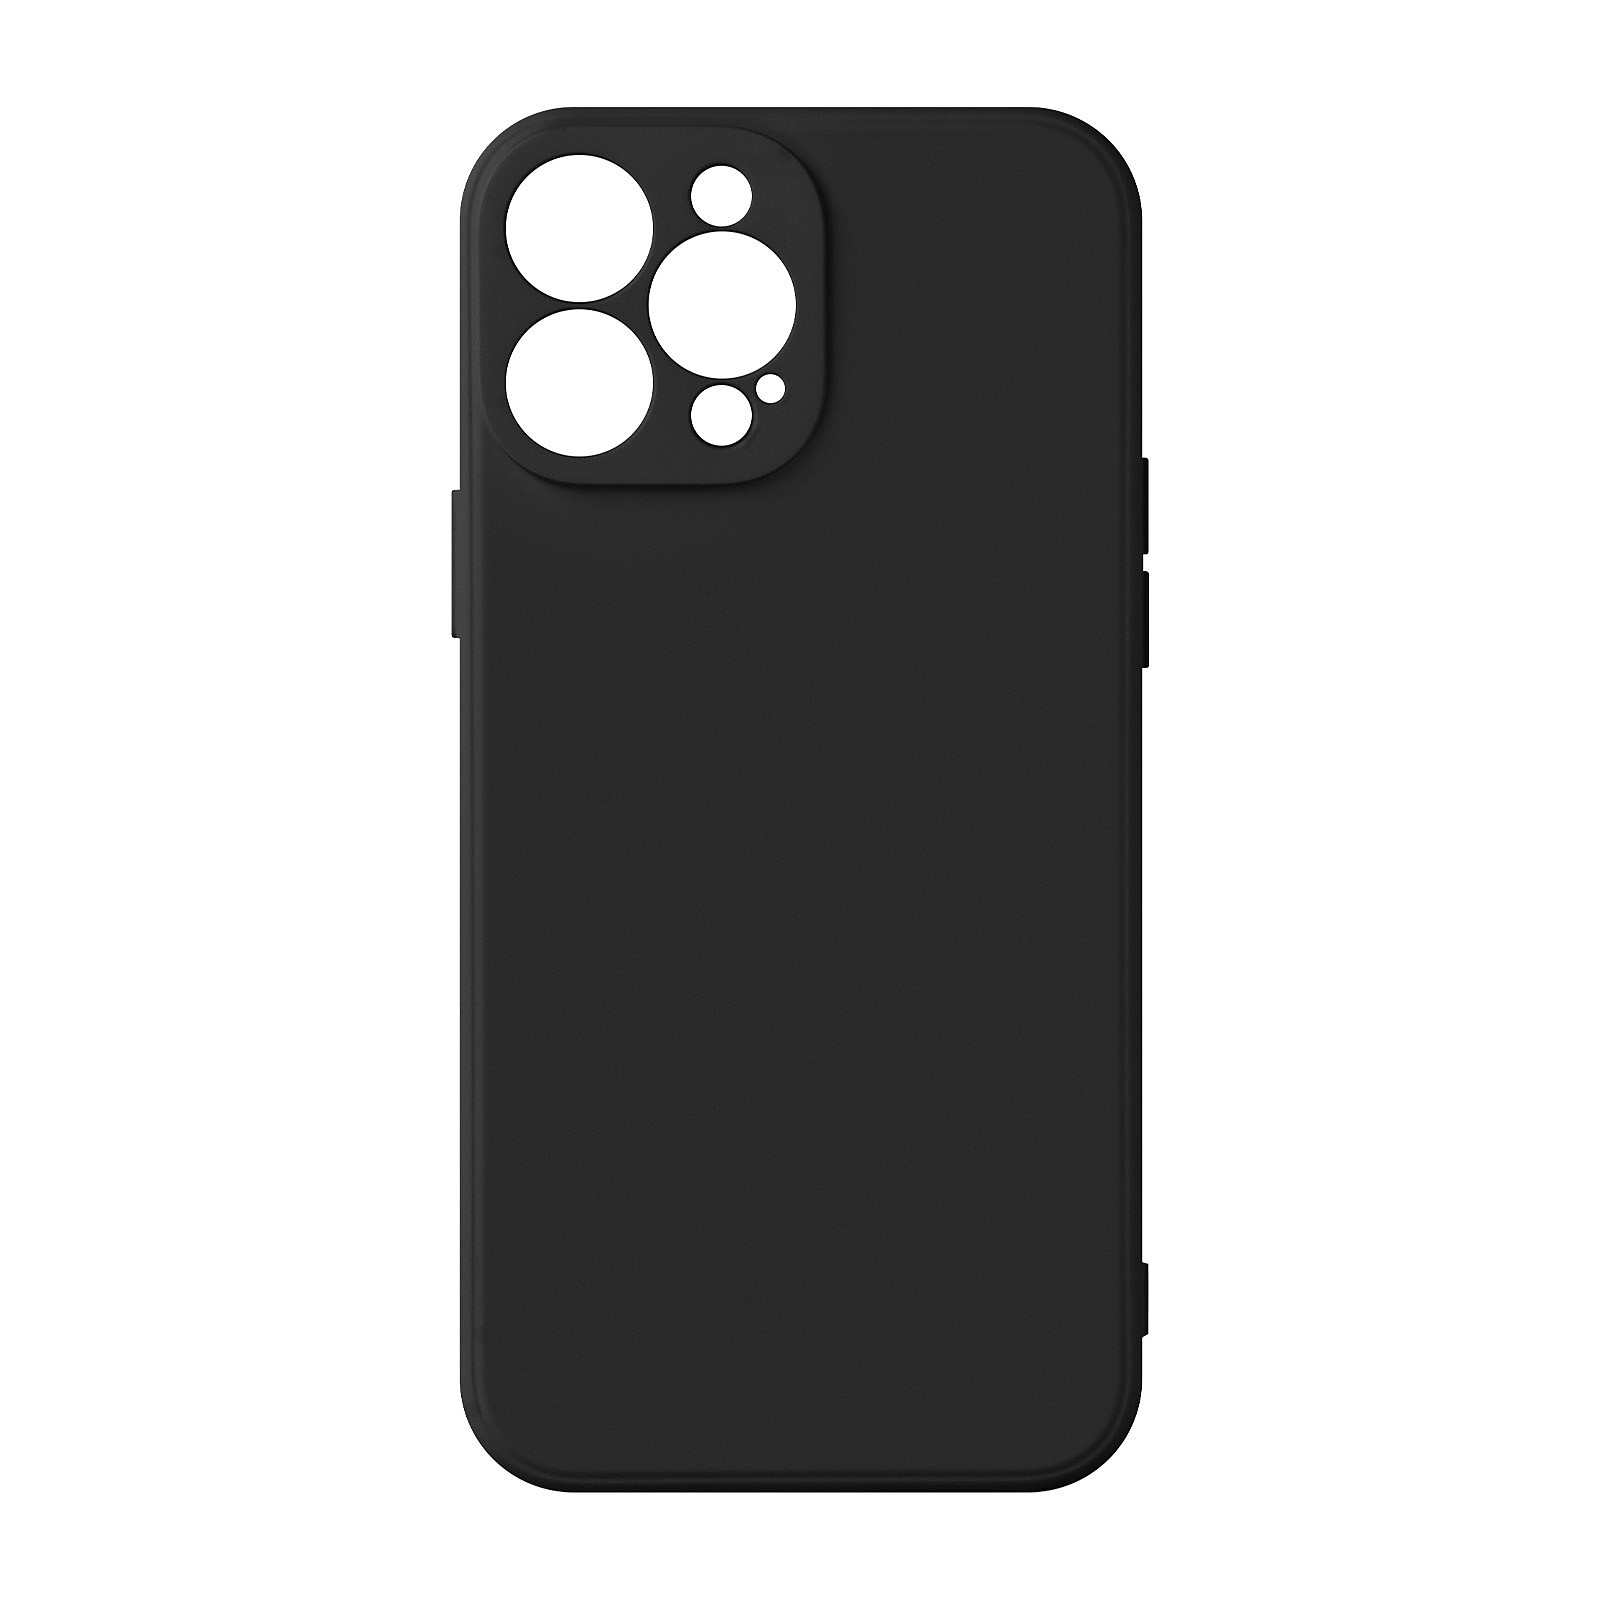 Avizar Coque pour iPhone 13 Pro Silicone Semi-Rigide avec Finition Soft Touch Noir - Coque telephone Avizar